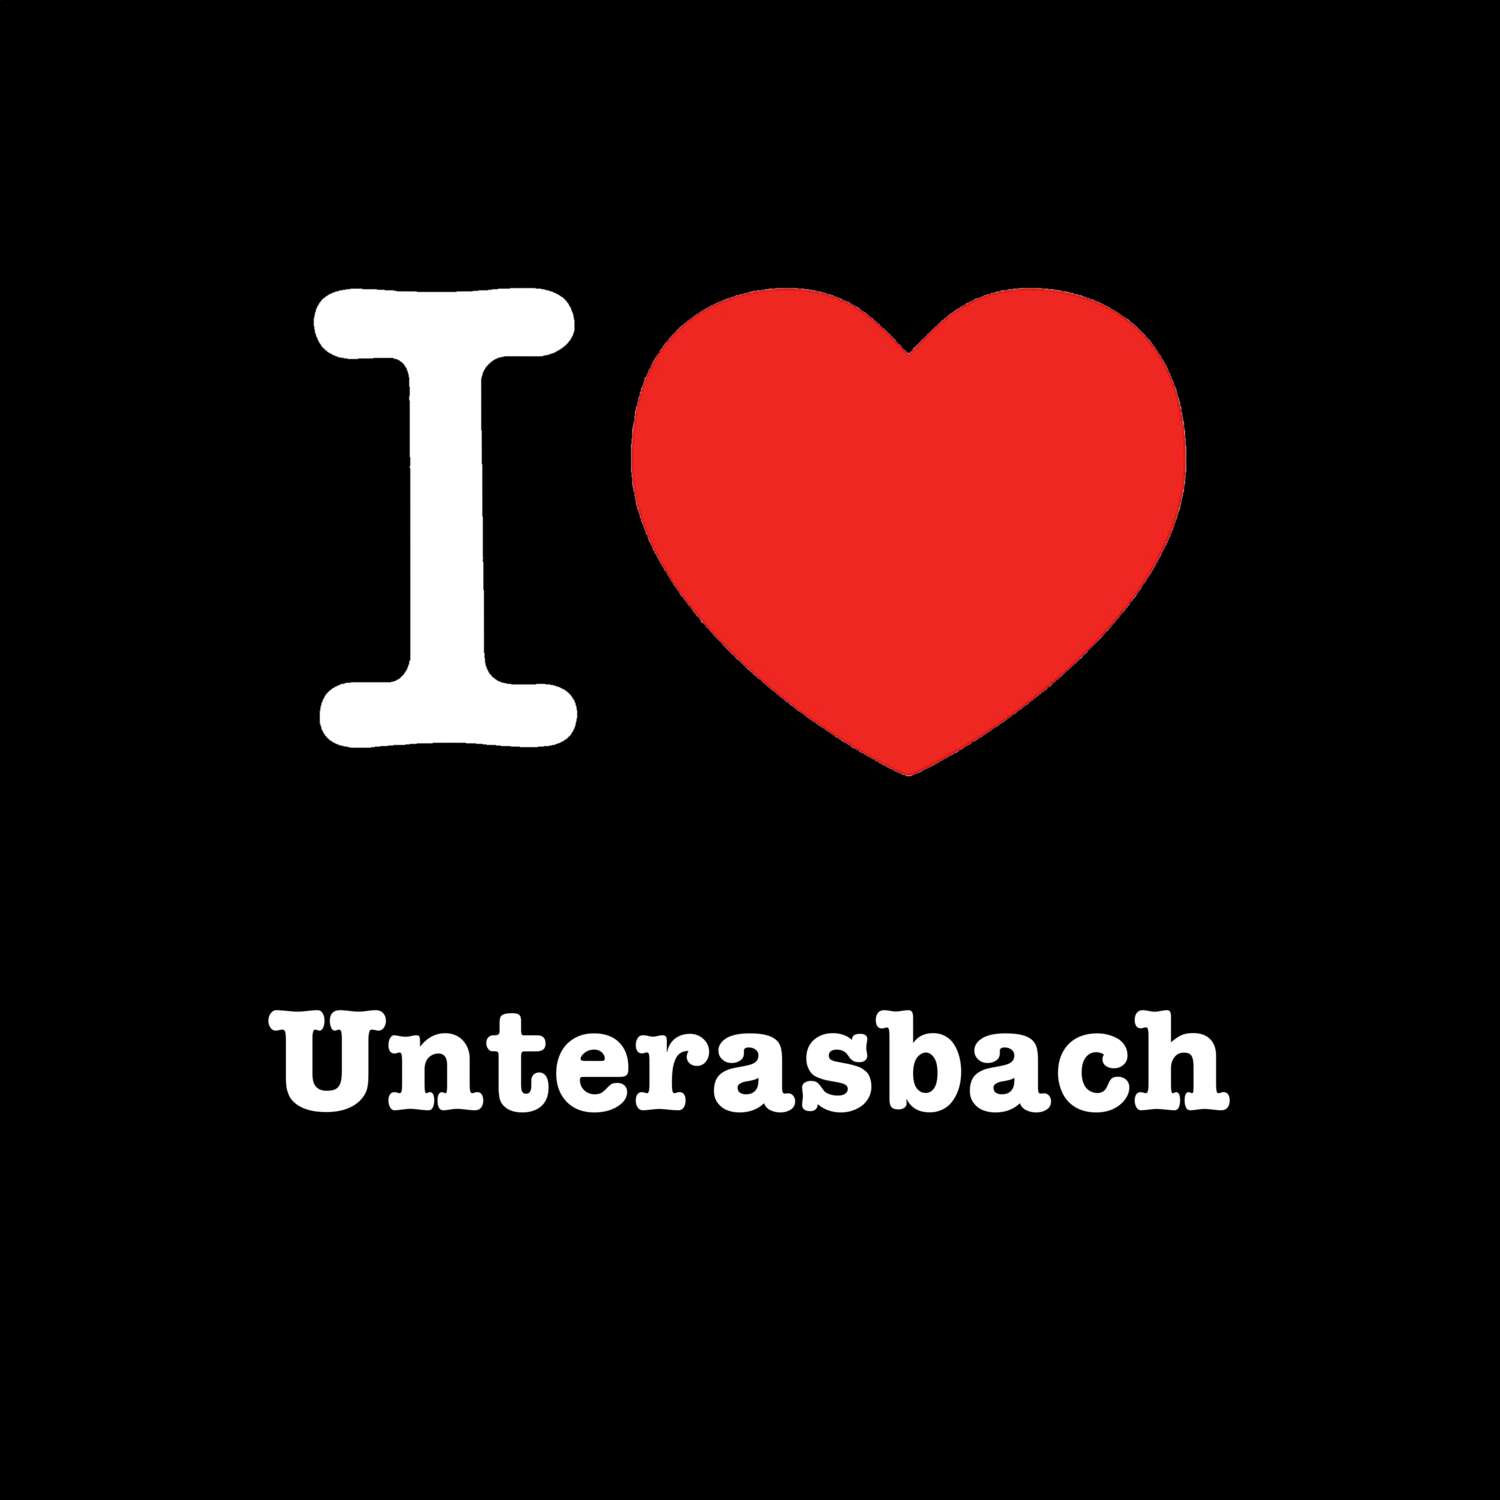 Unterasbach T-Shirt »I love«